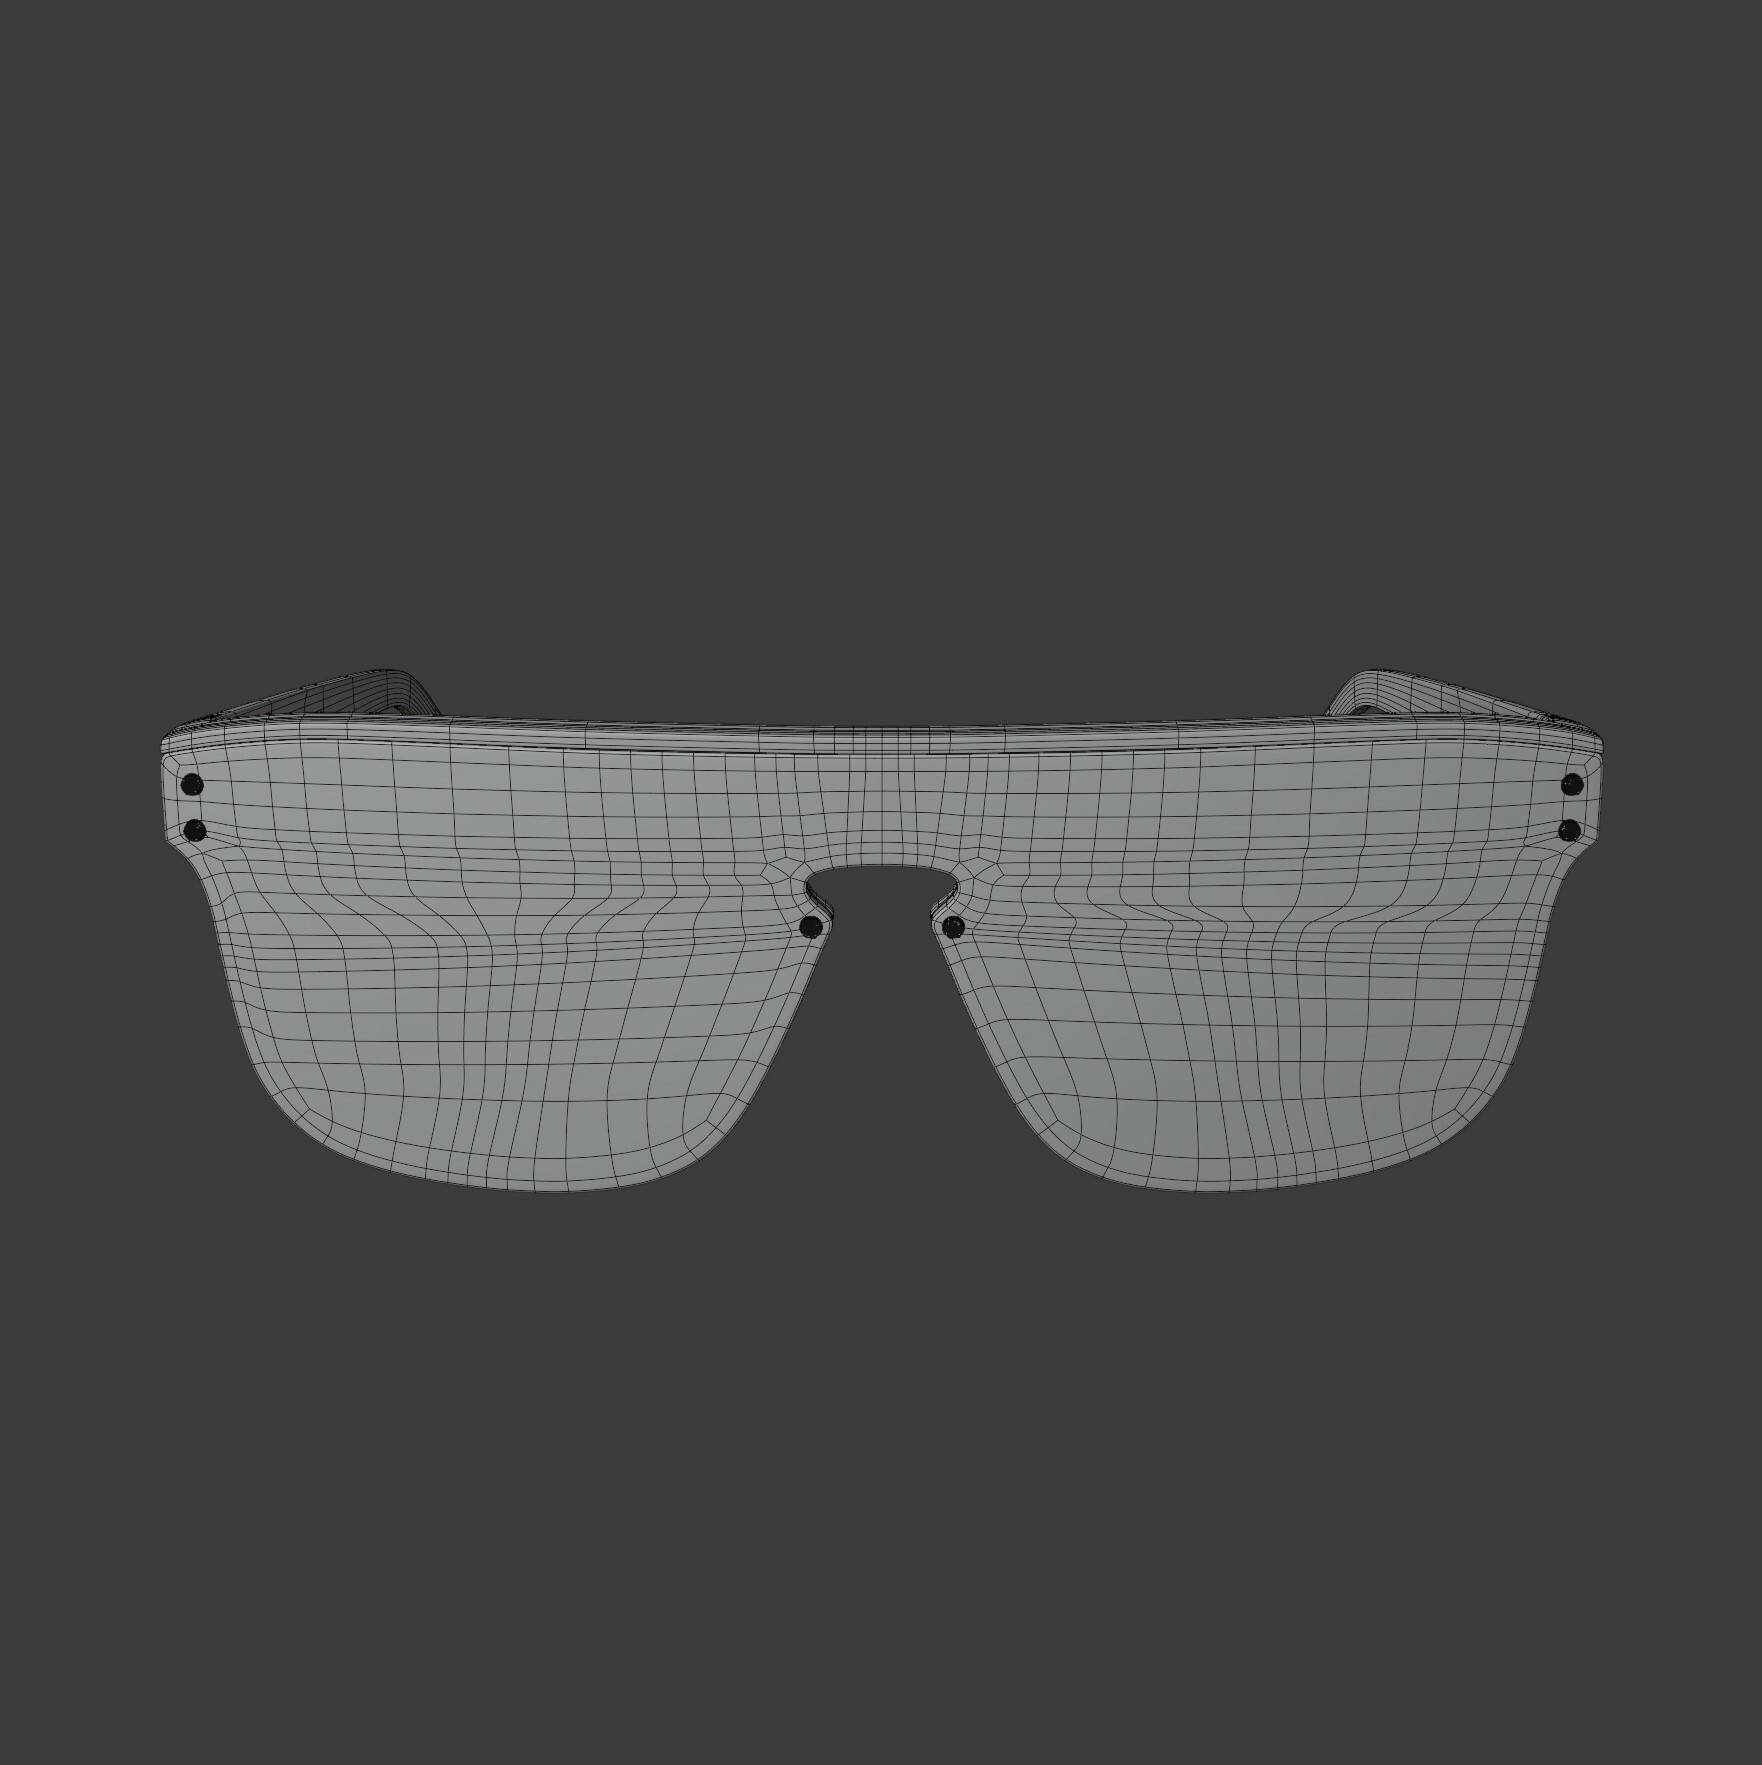 ArtStation - Waimea Sunglasses